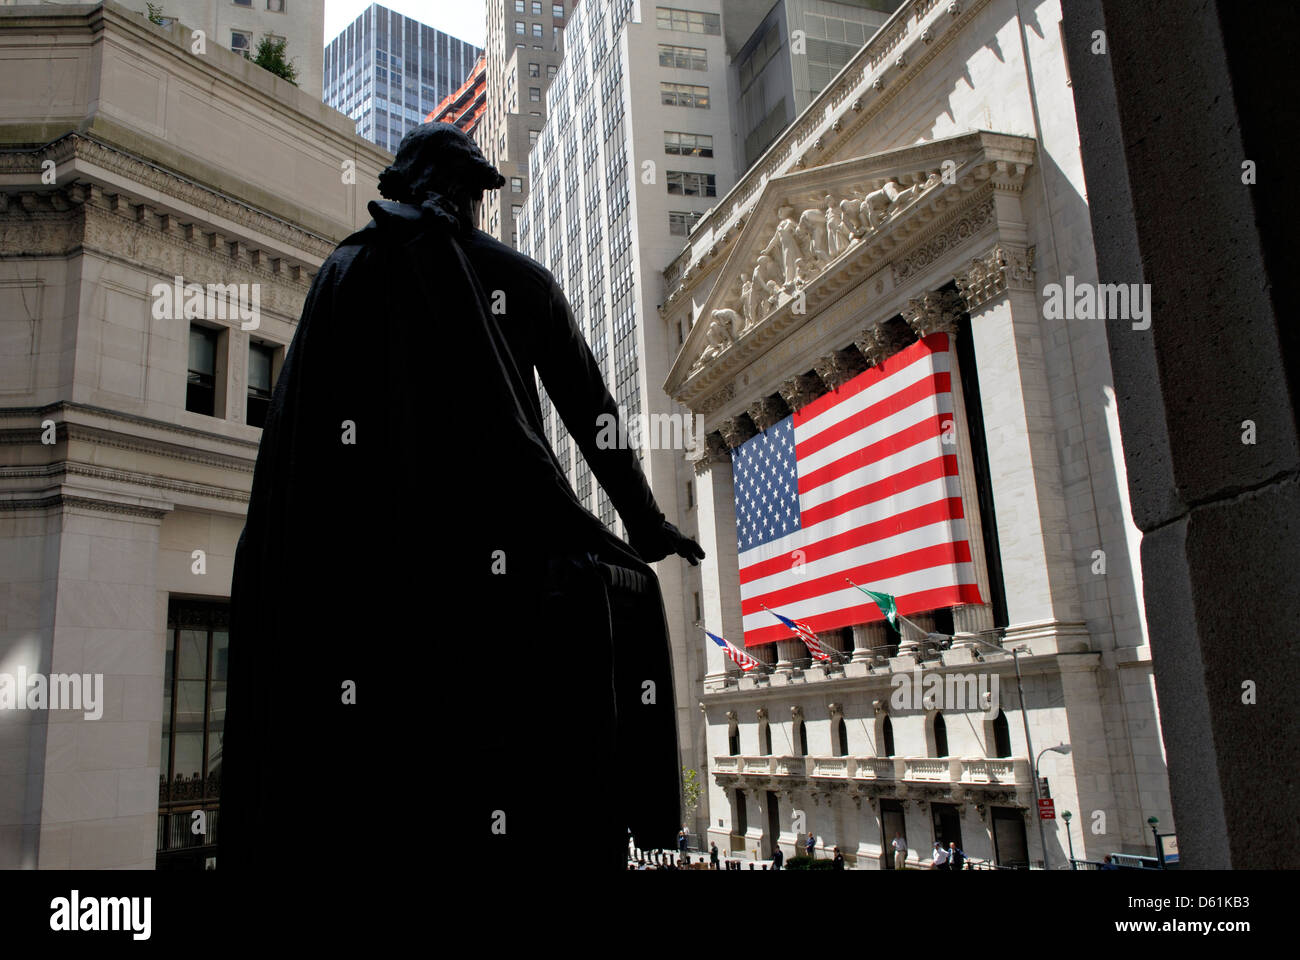 George-Washington-Memorial facing New York Stock Exchange, Wall Street, NYC, USA - Image taken from public ground Stock Photo